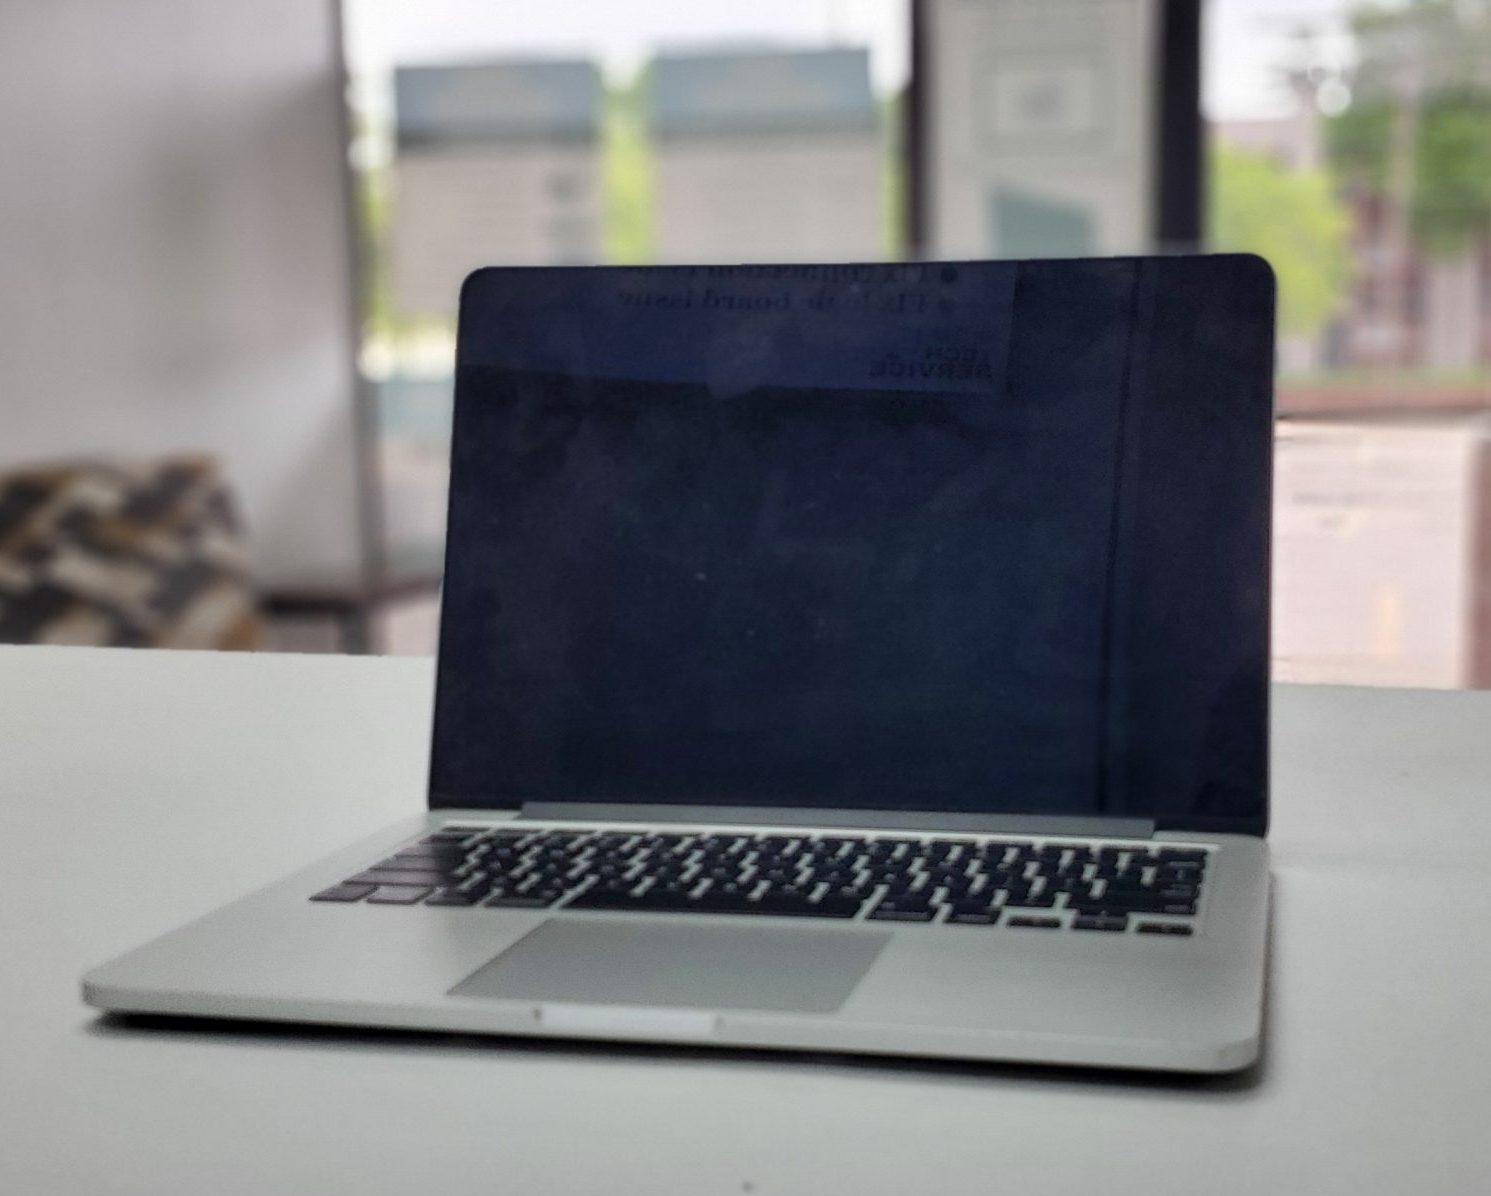 MacBook laptop repair Plano school ifixdallas